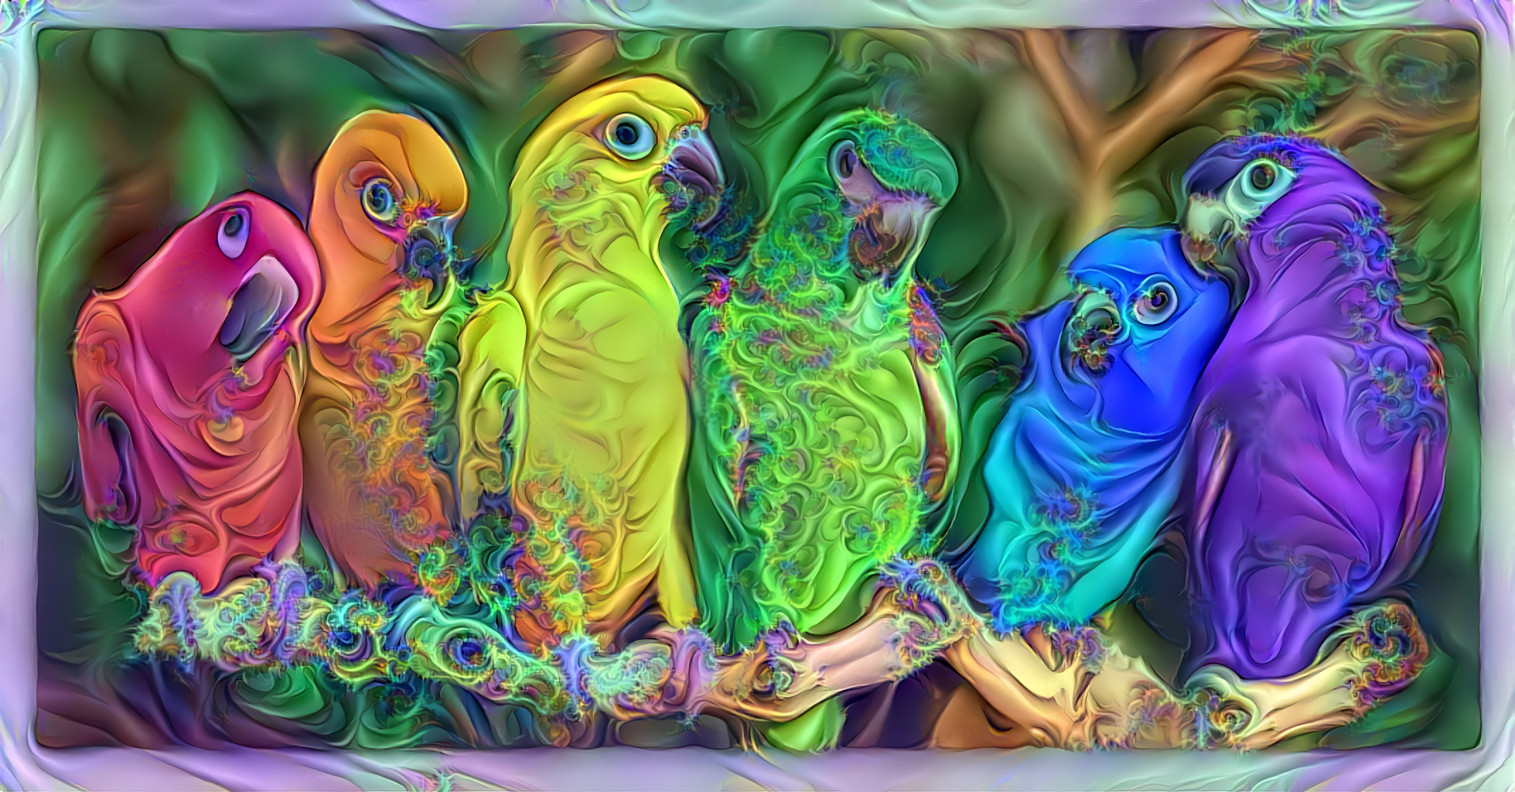 Pride Parrots can be seen in June